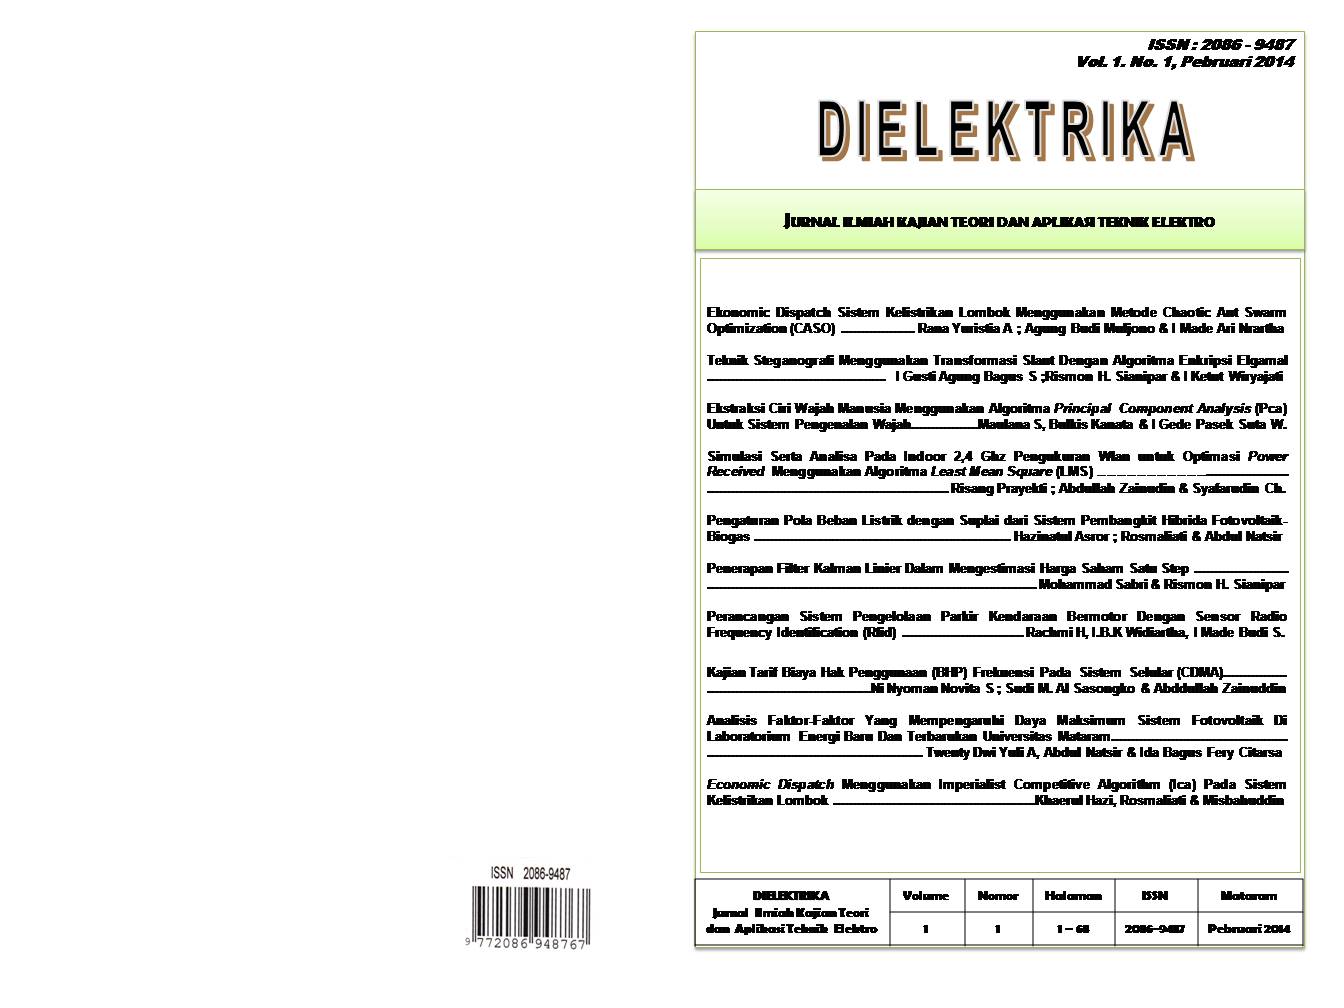 					View Vol. 1 No. 1 (2014): DIELEKTRIKA
				